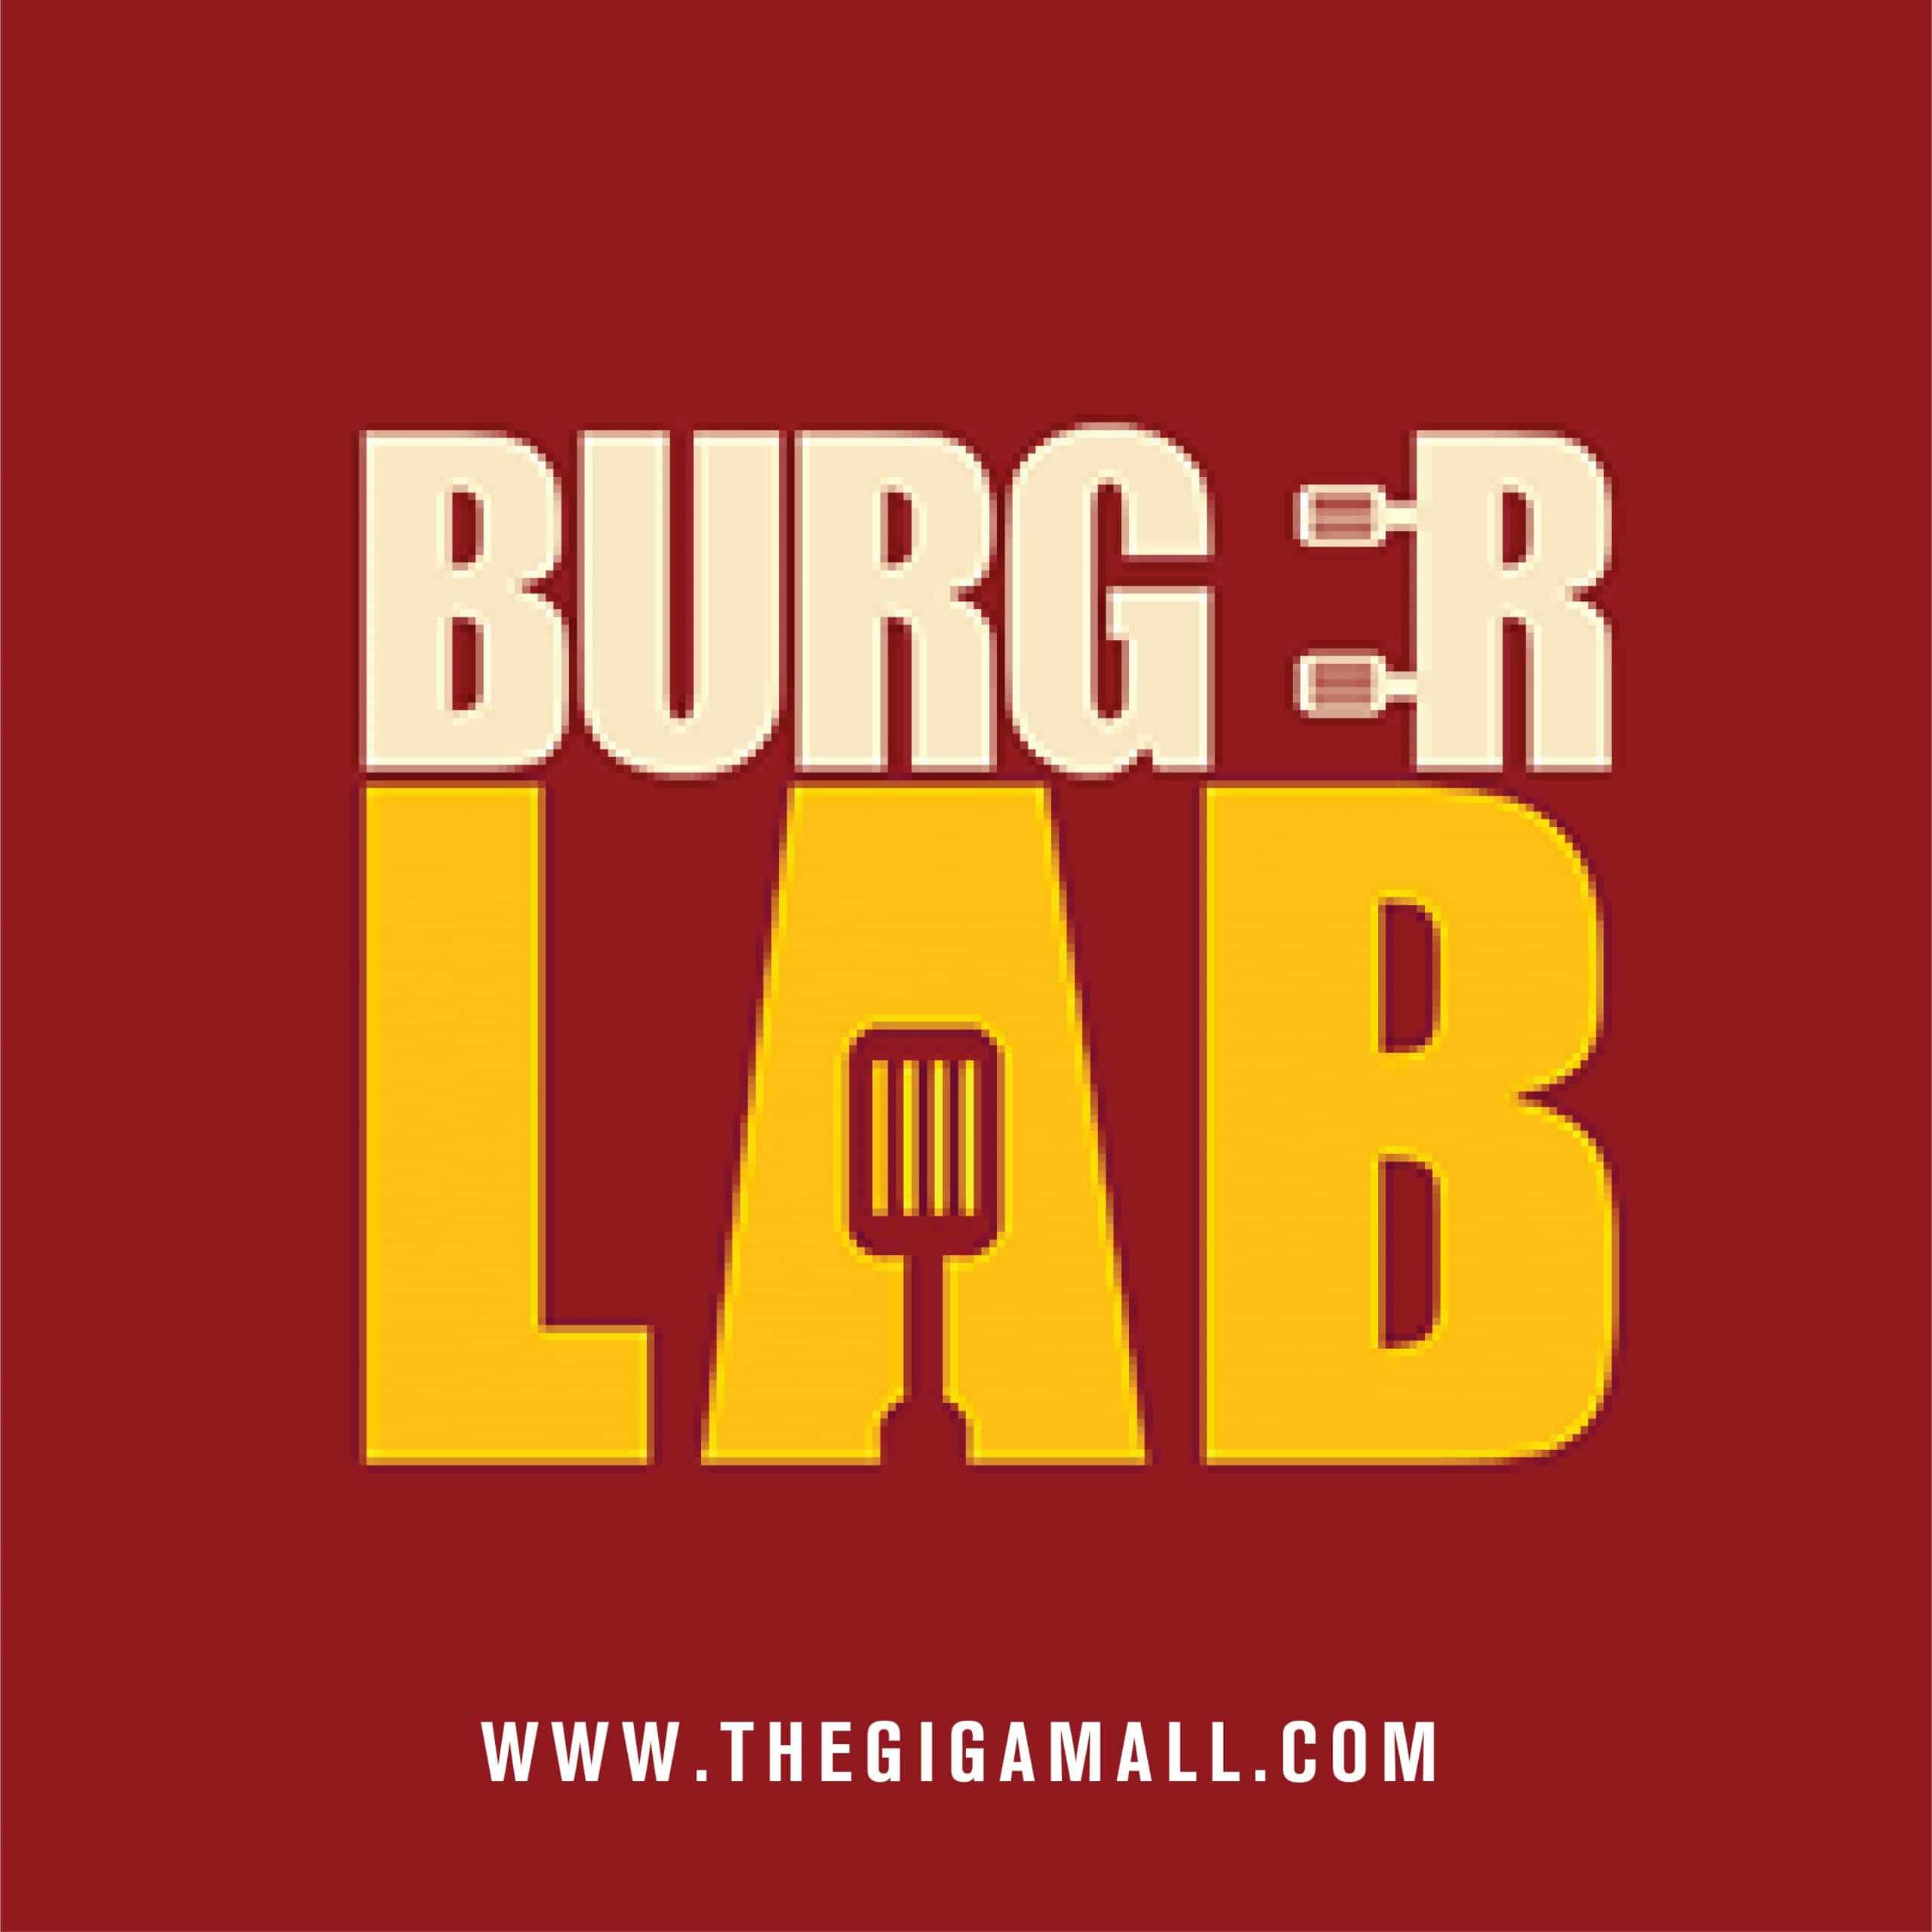 Burger lab